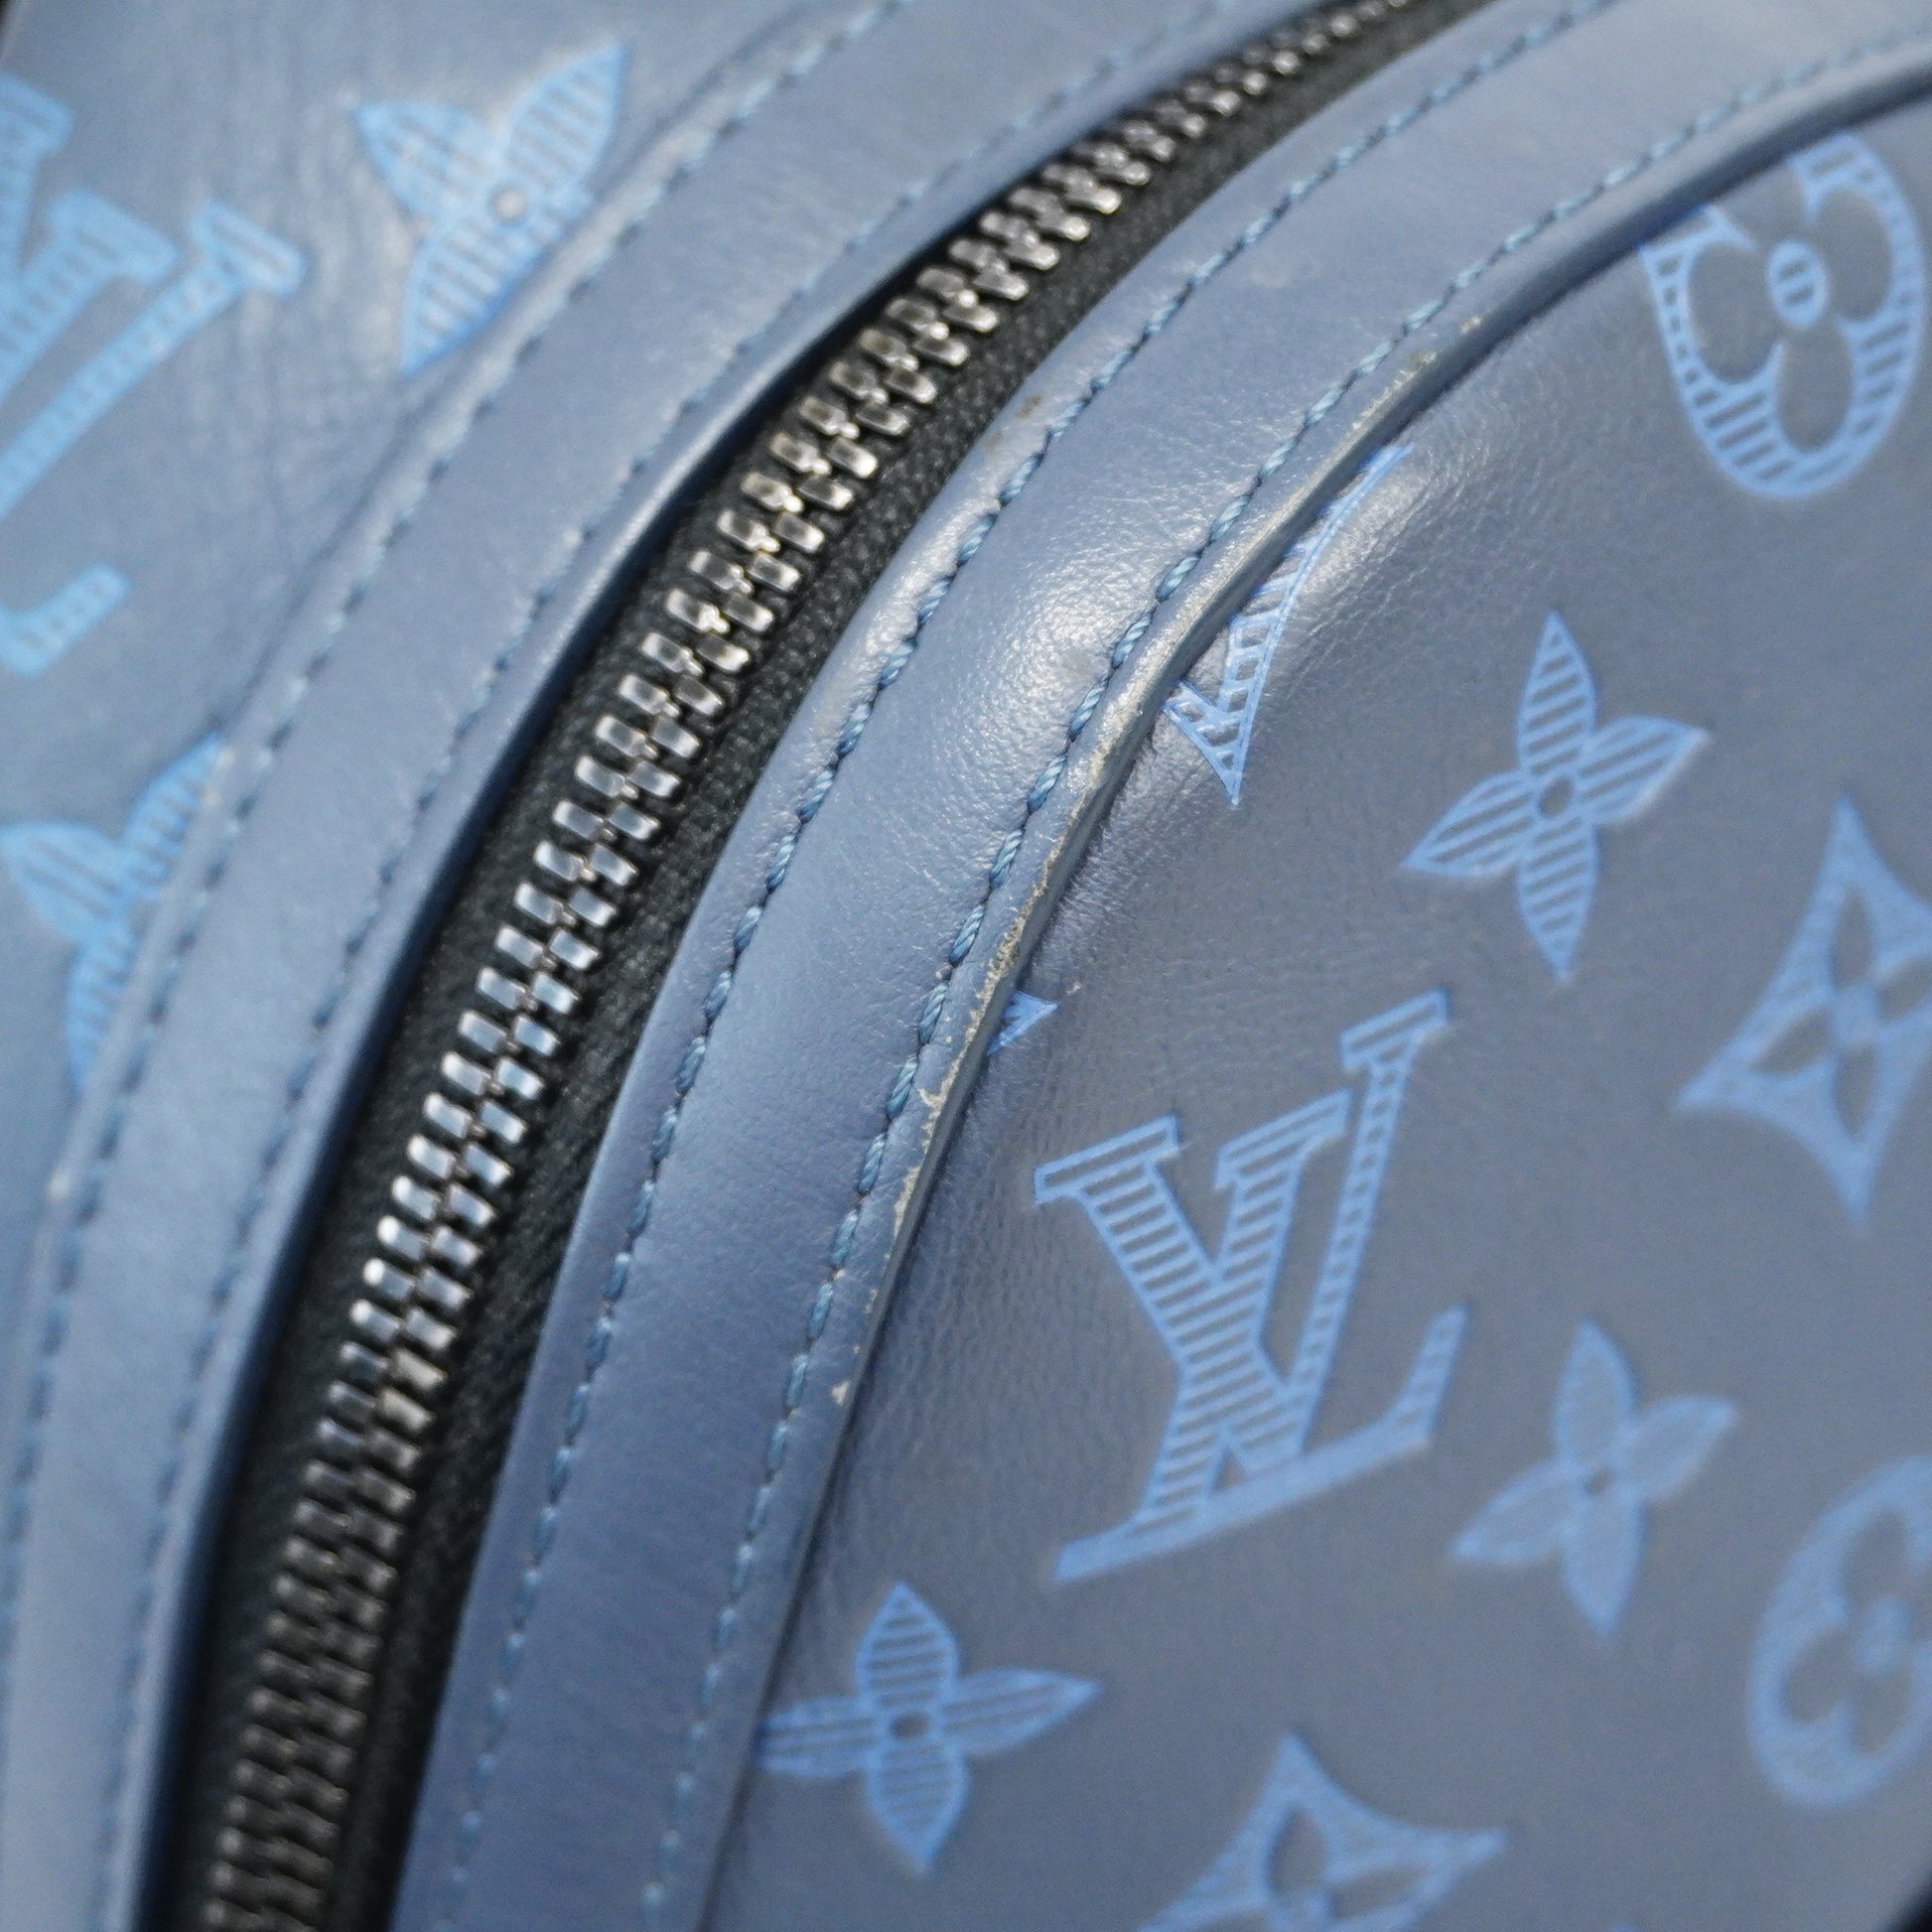 Louis Vuitton M44727 LV Sprinter Backpack in Monogram Shadow Leather  Replica sale online ,buy fake bag